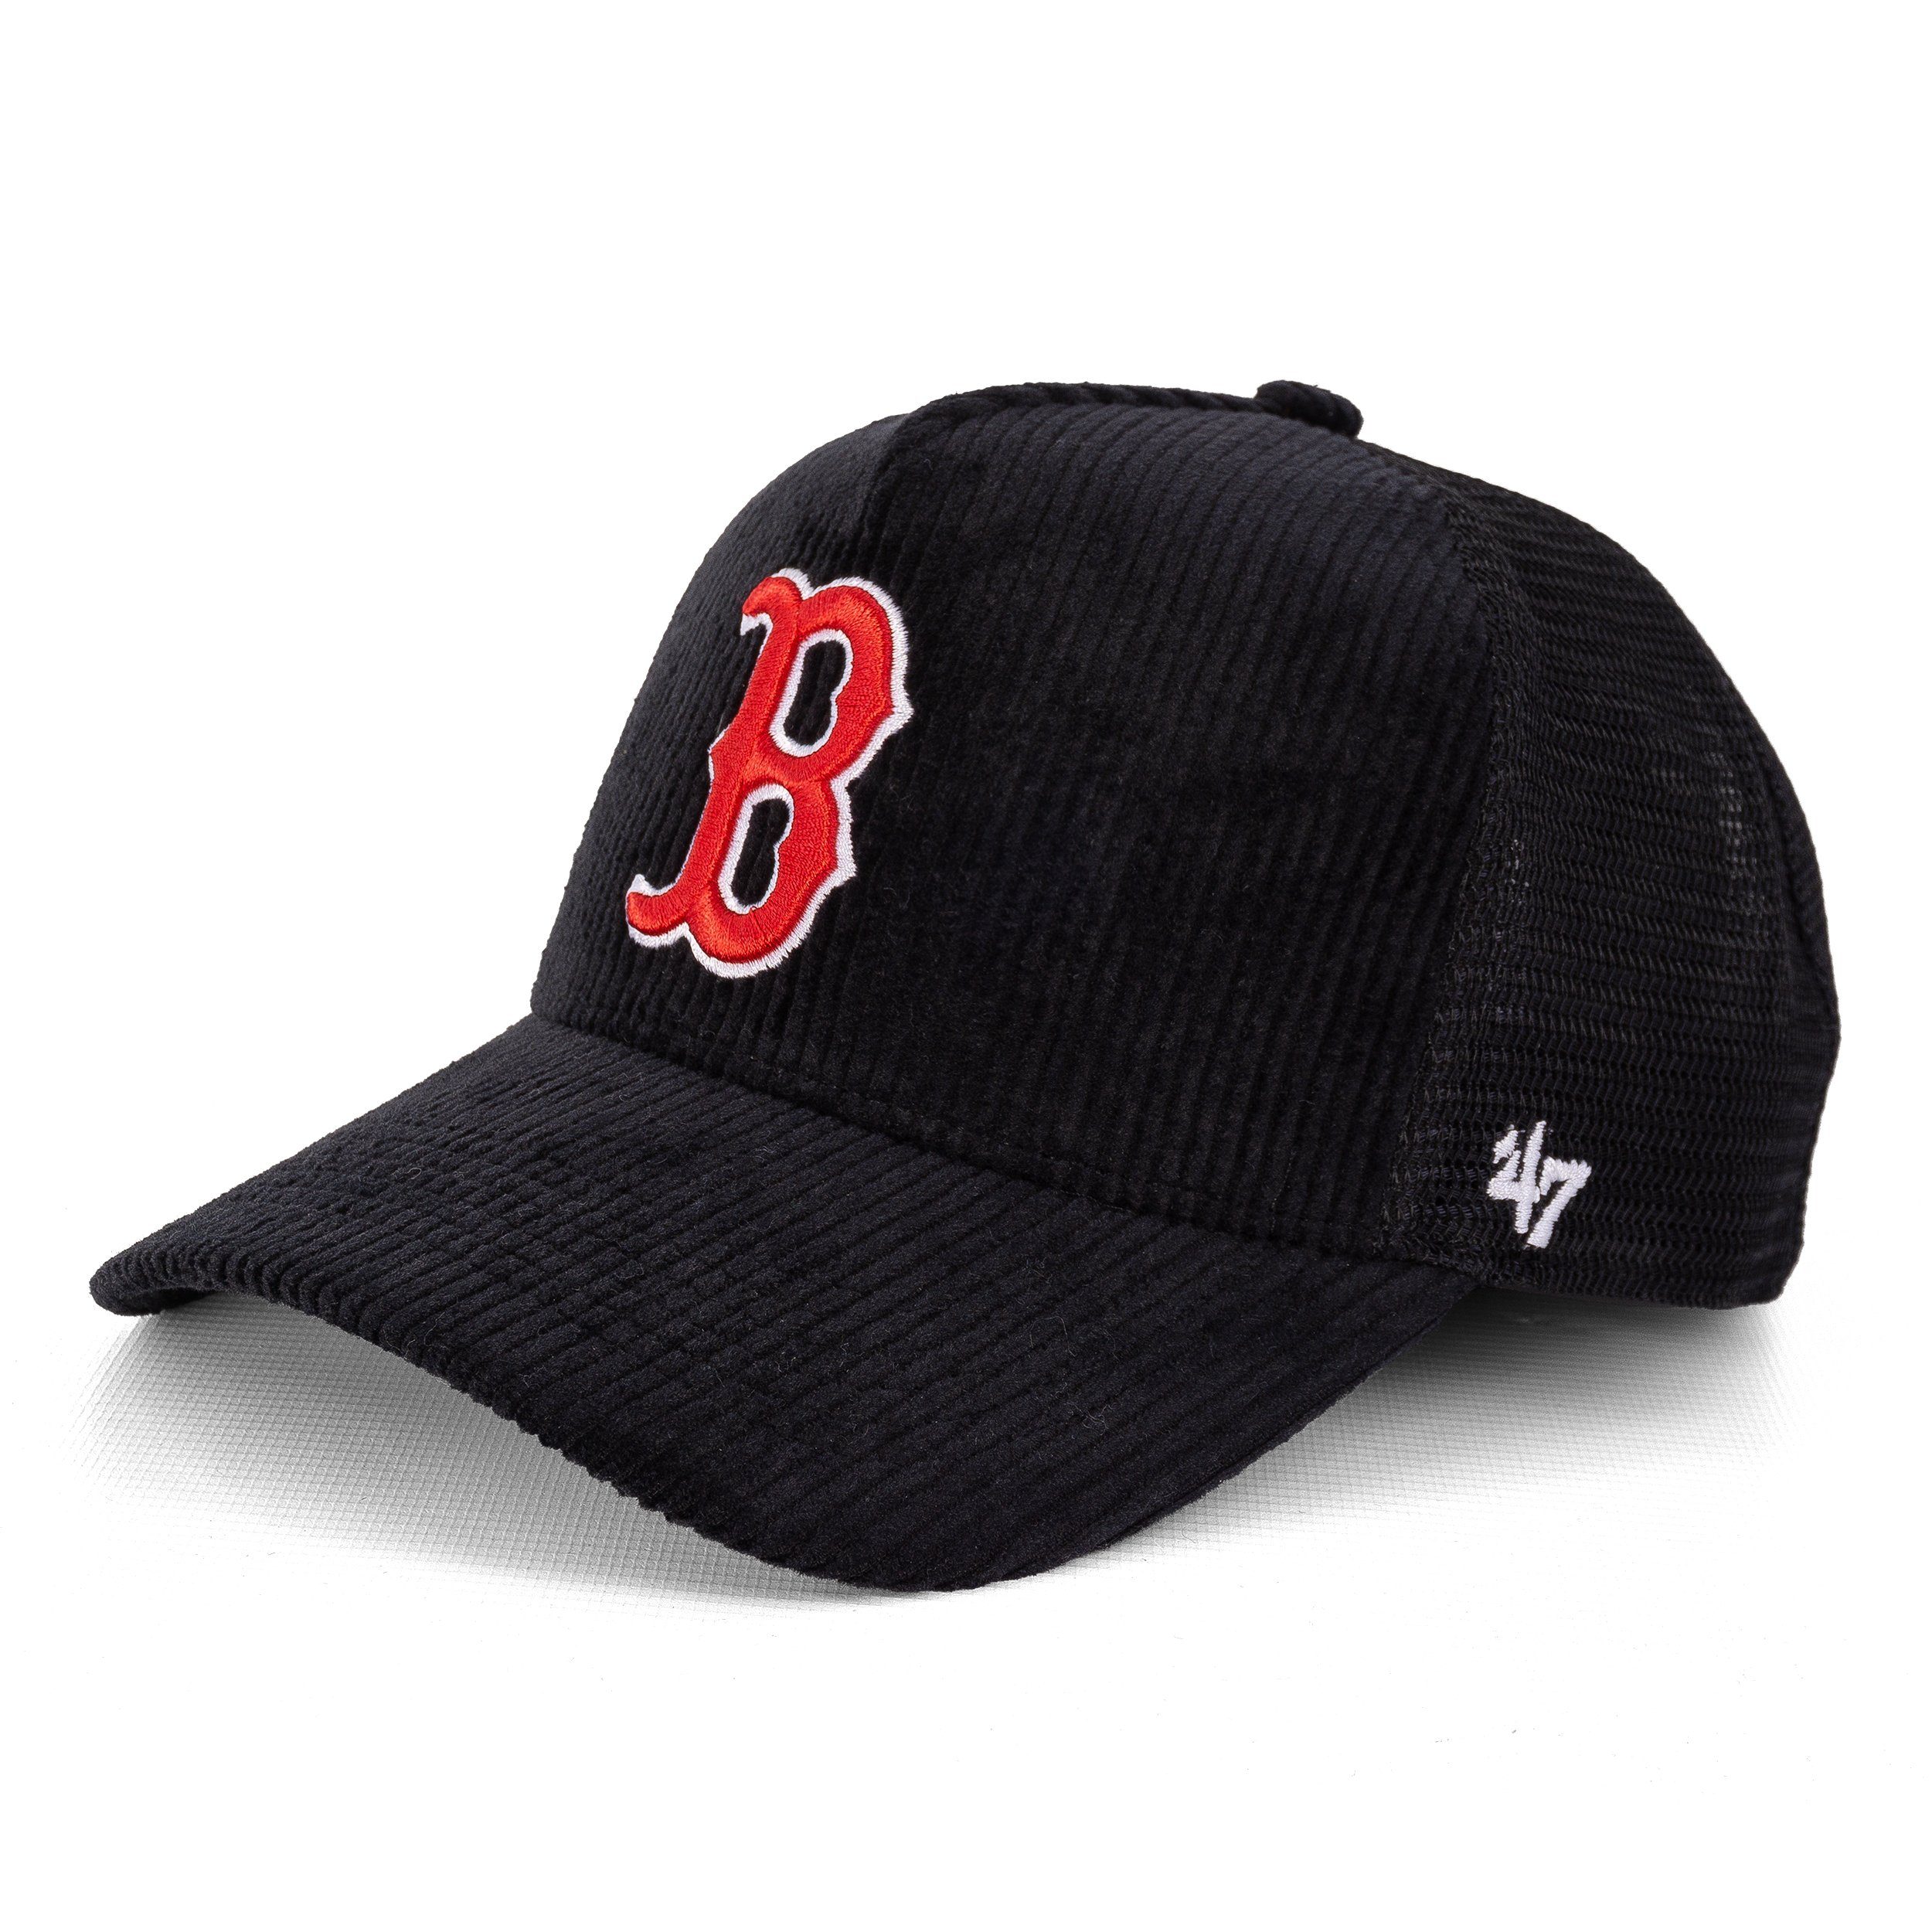 '47 Brand Baseball Cap '47 Brand Boston Red Sox thick Cord Cap schwarz